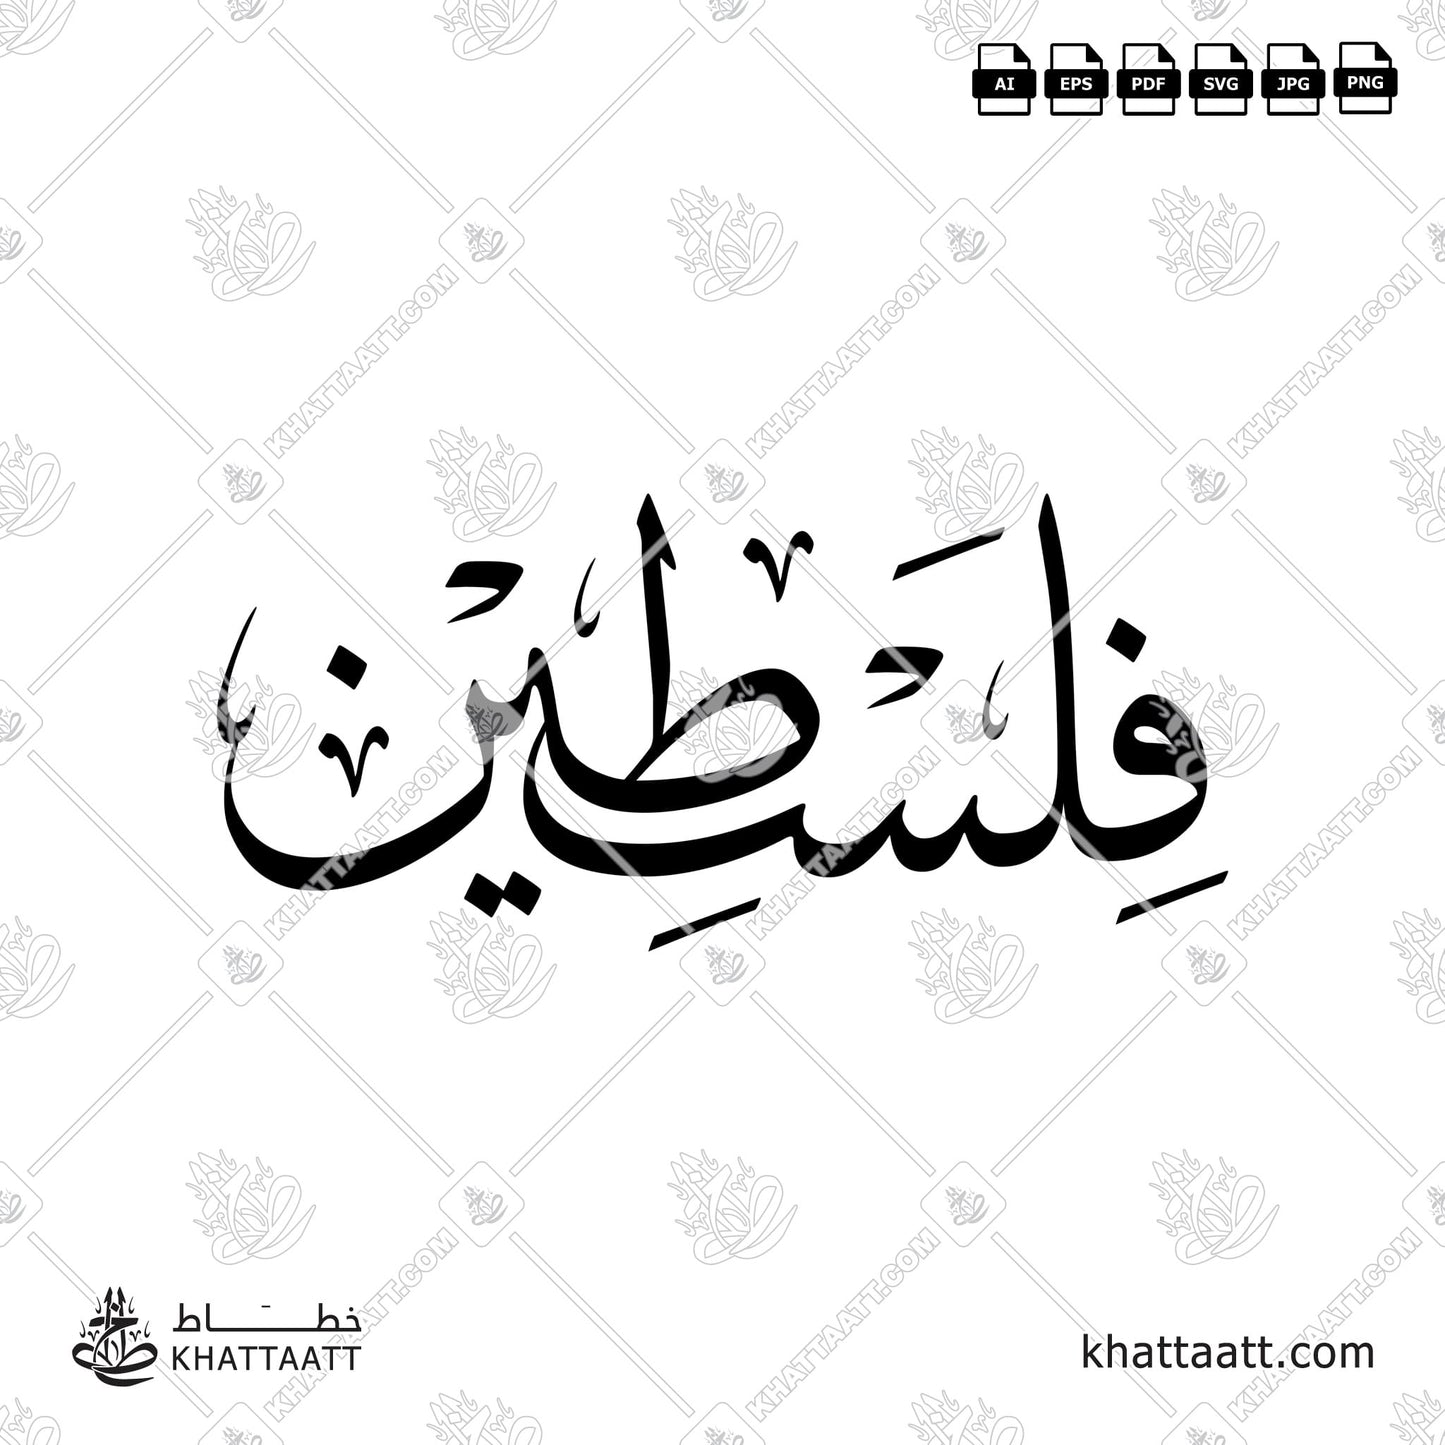 Arabic Calligraphy of Palestine فلسطين in Thuluth Script خط الثلث.